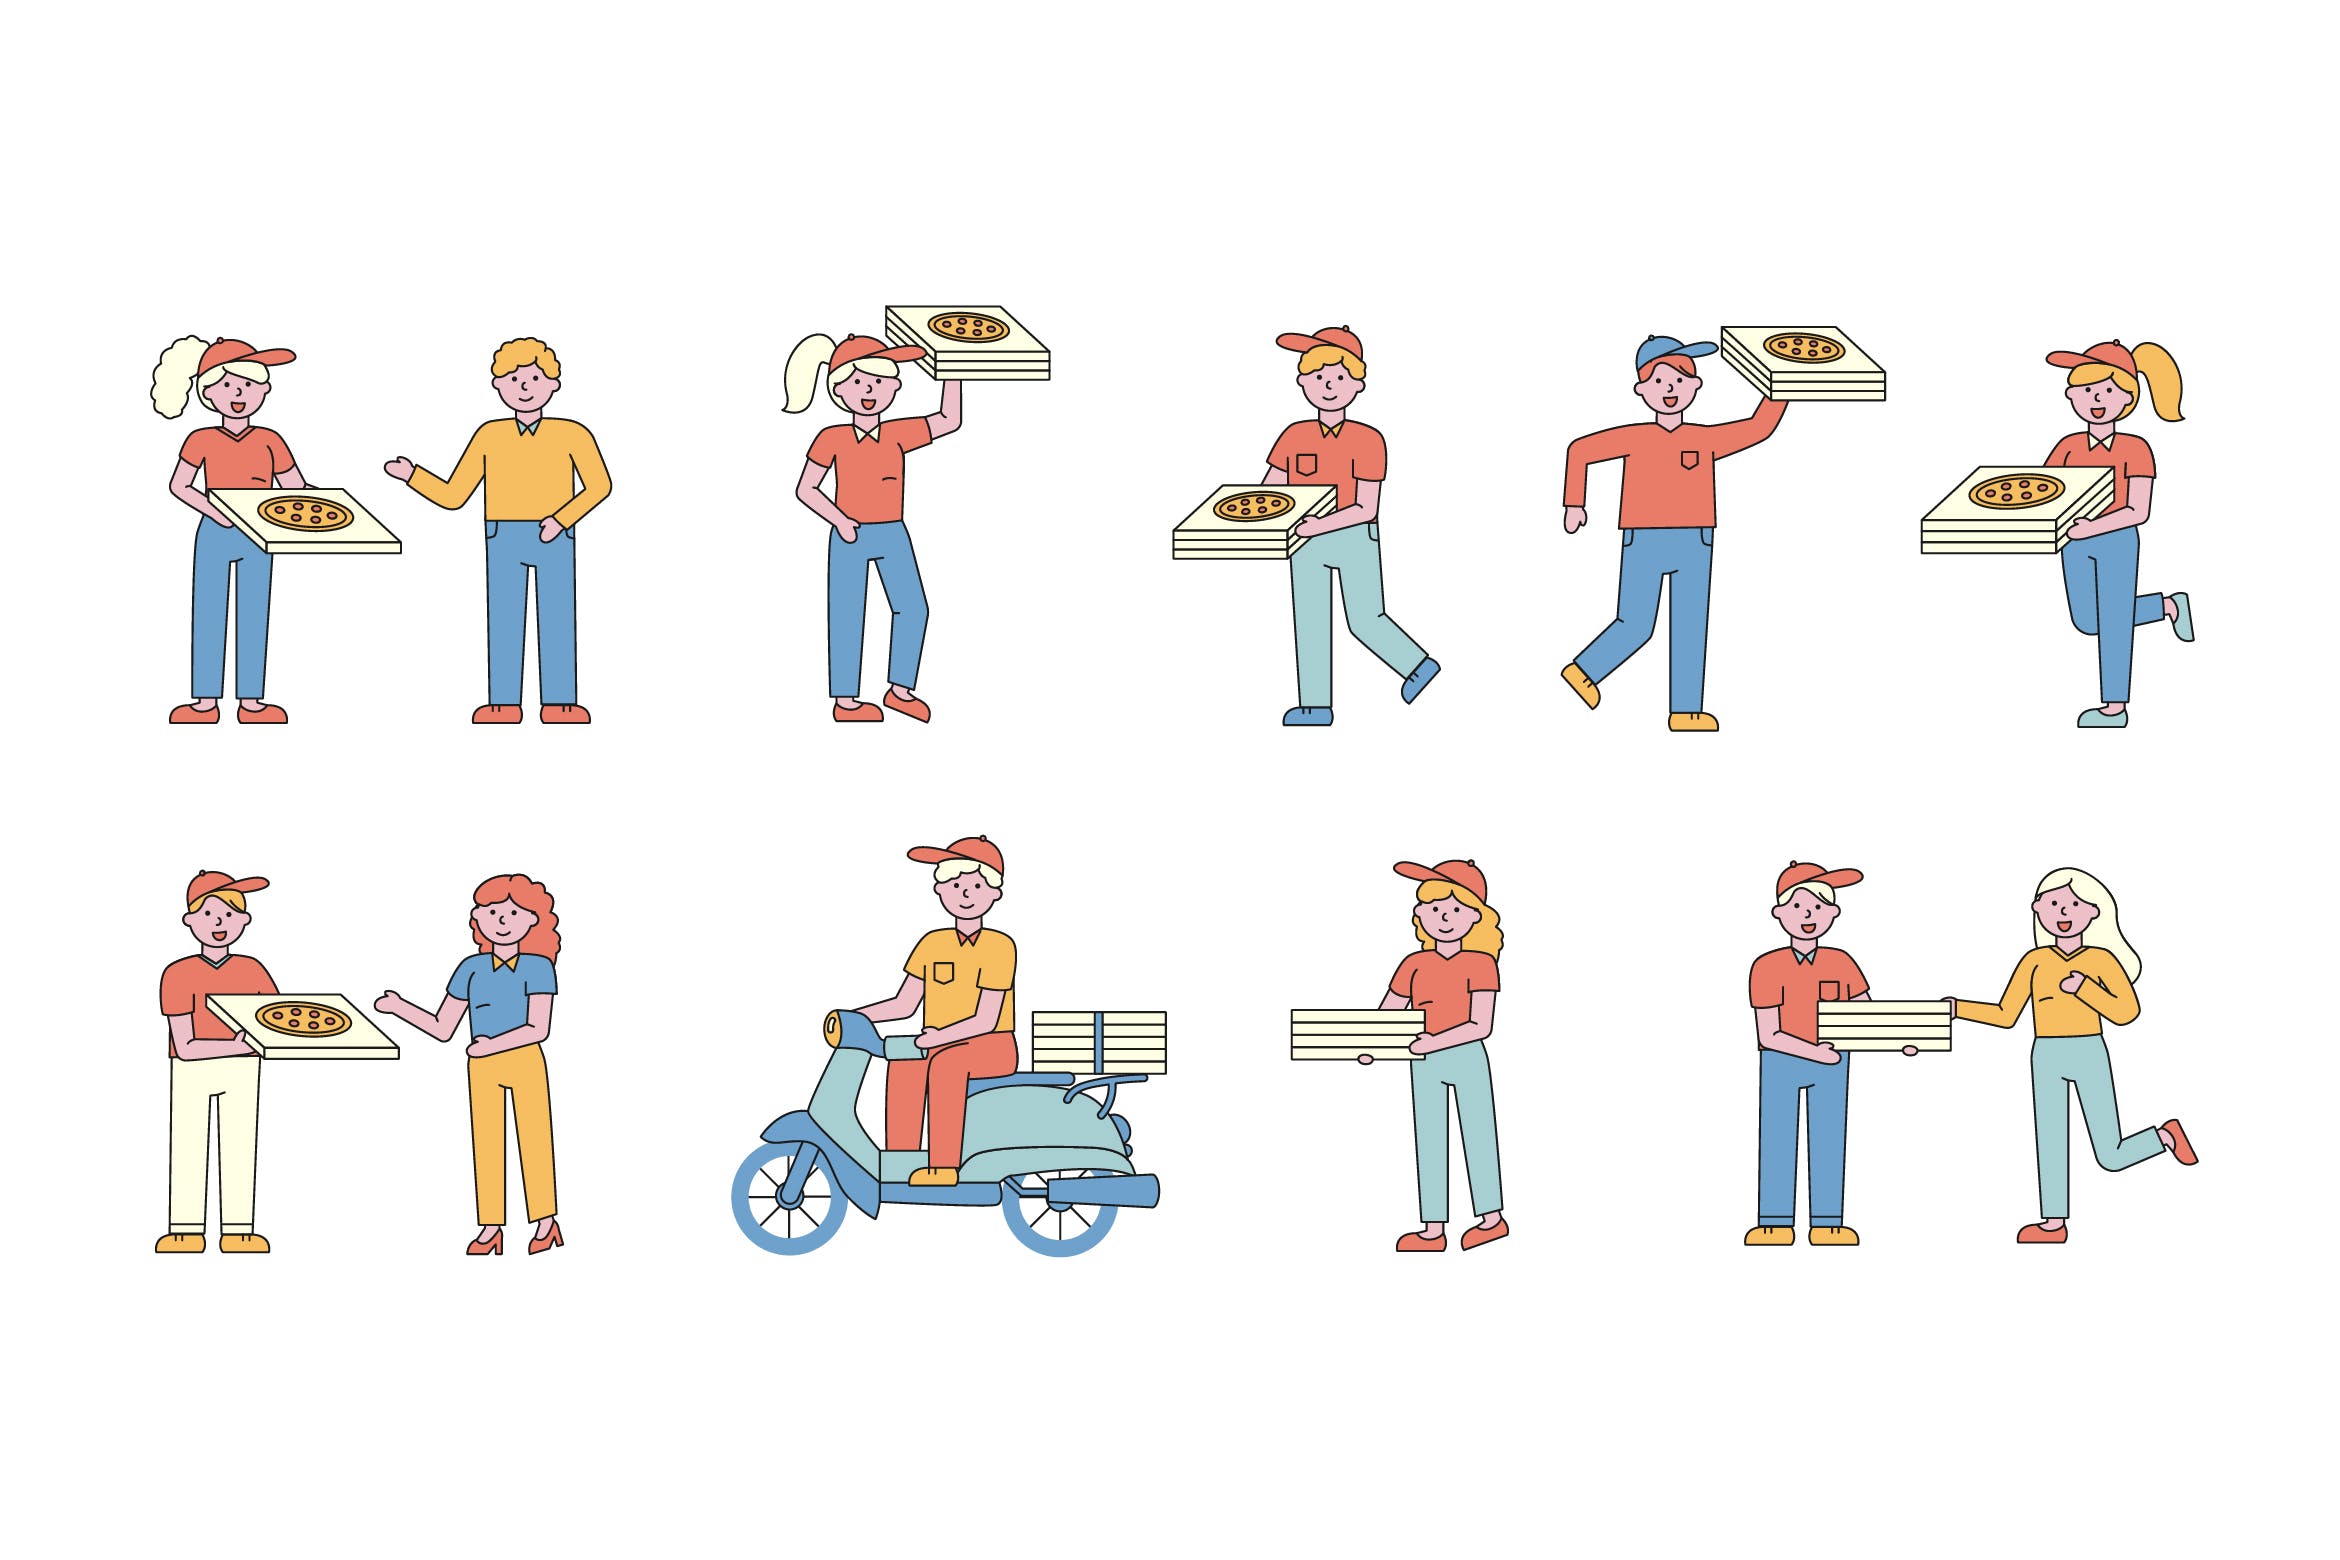 披萨送餐员人物形象线条艺术矢量插画素材库精选素材 Pizza delivery Lineart People Character Collection插图